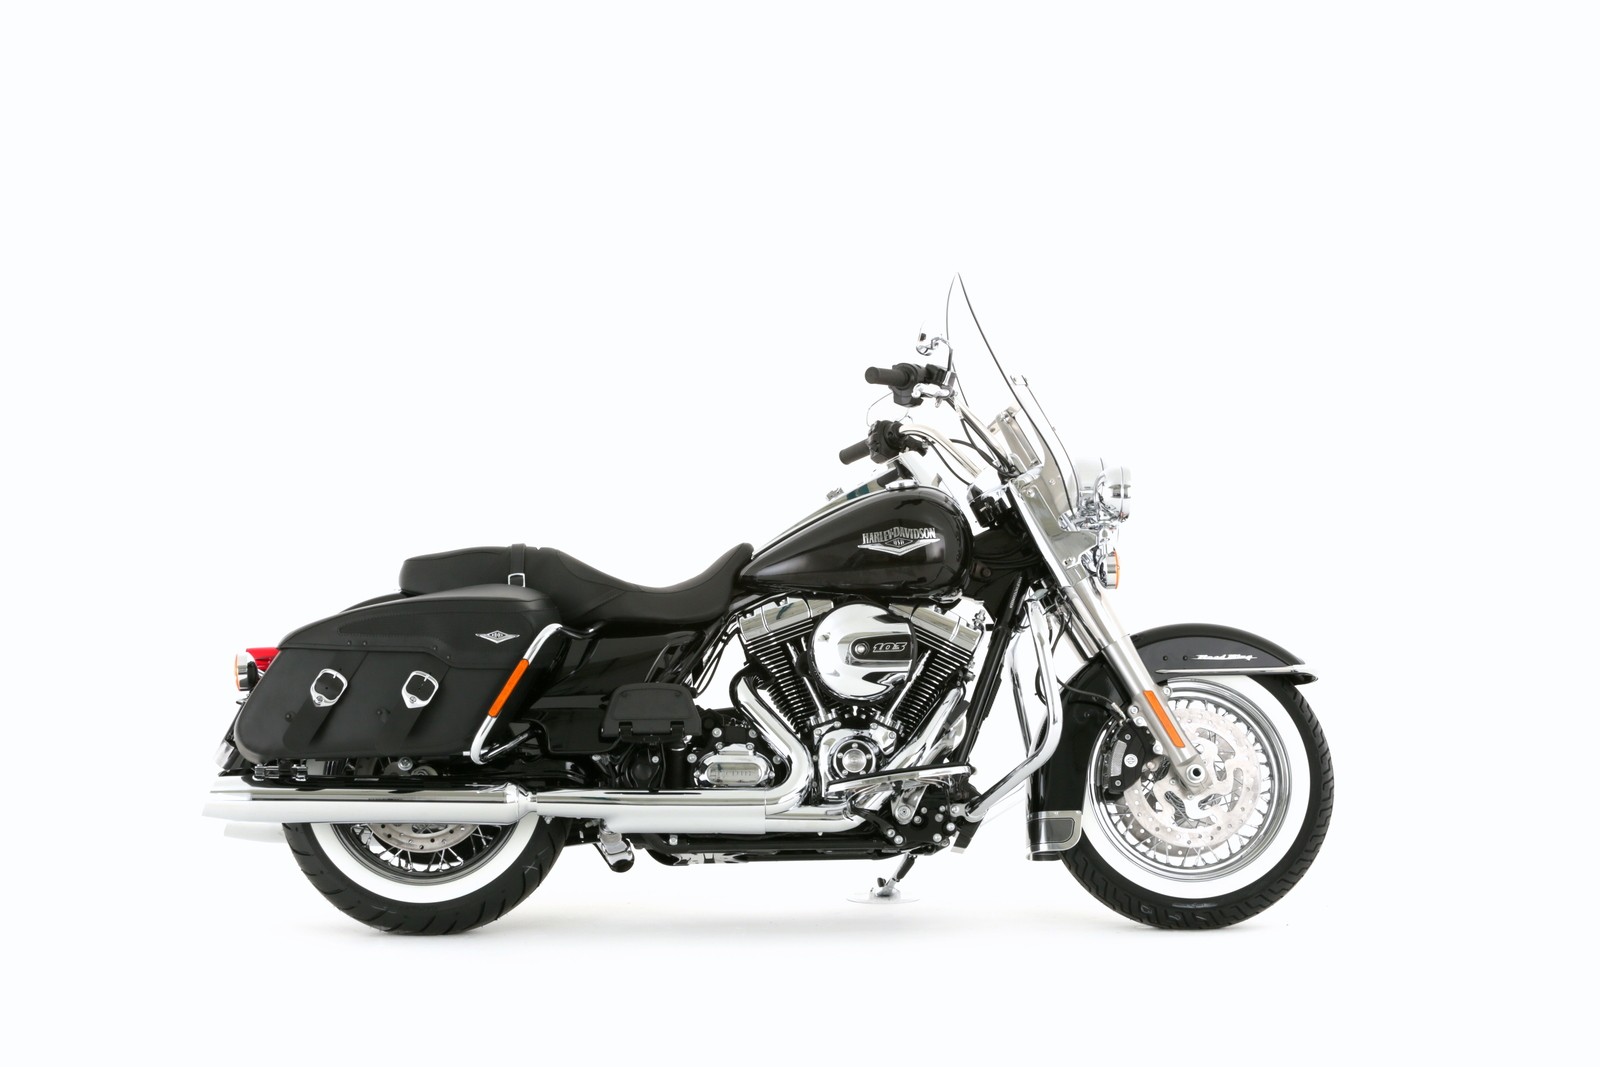 General 1600x1067 Harley-Davidson vehicle simple background white background black motorcycles motorcycle